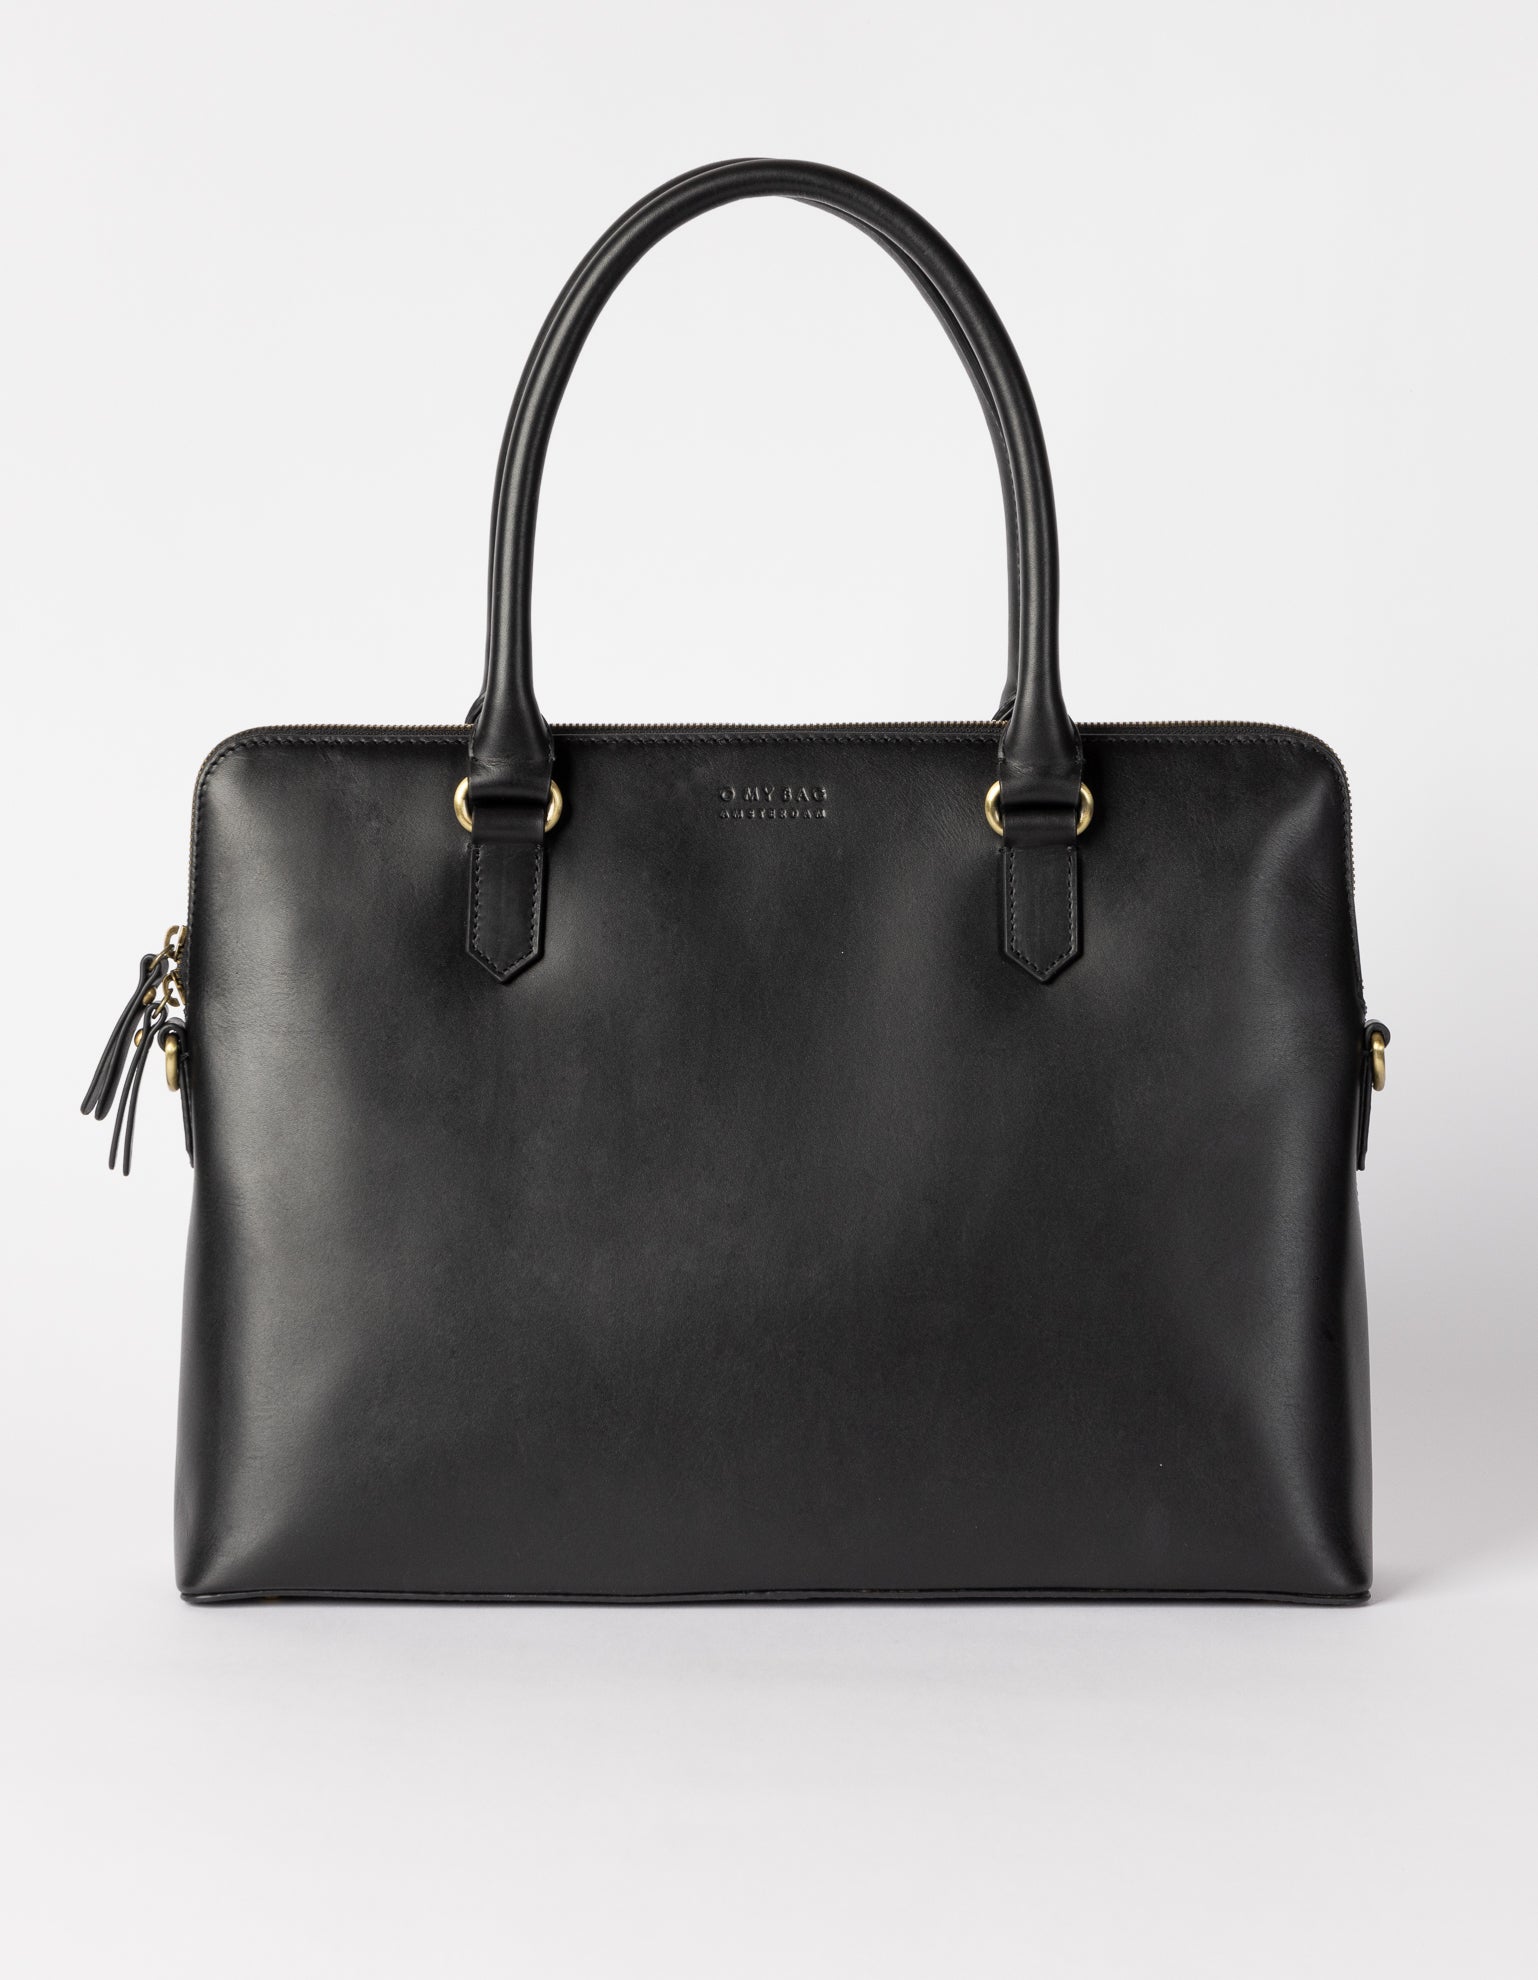 Hayden | Classic Leather